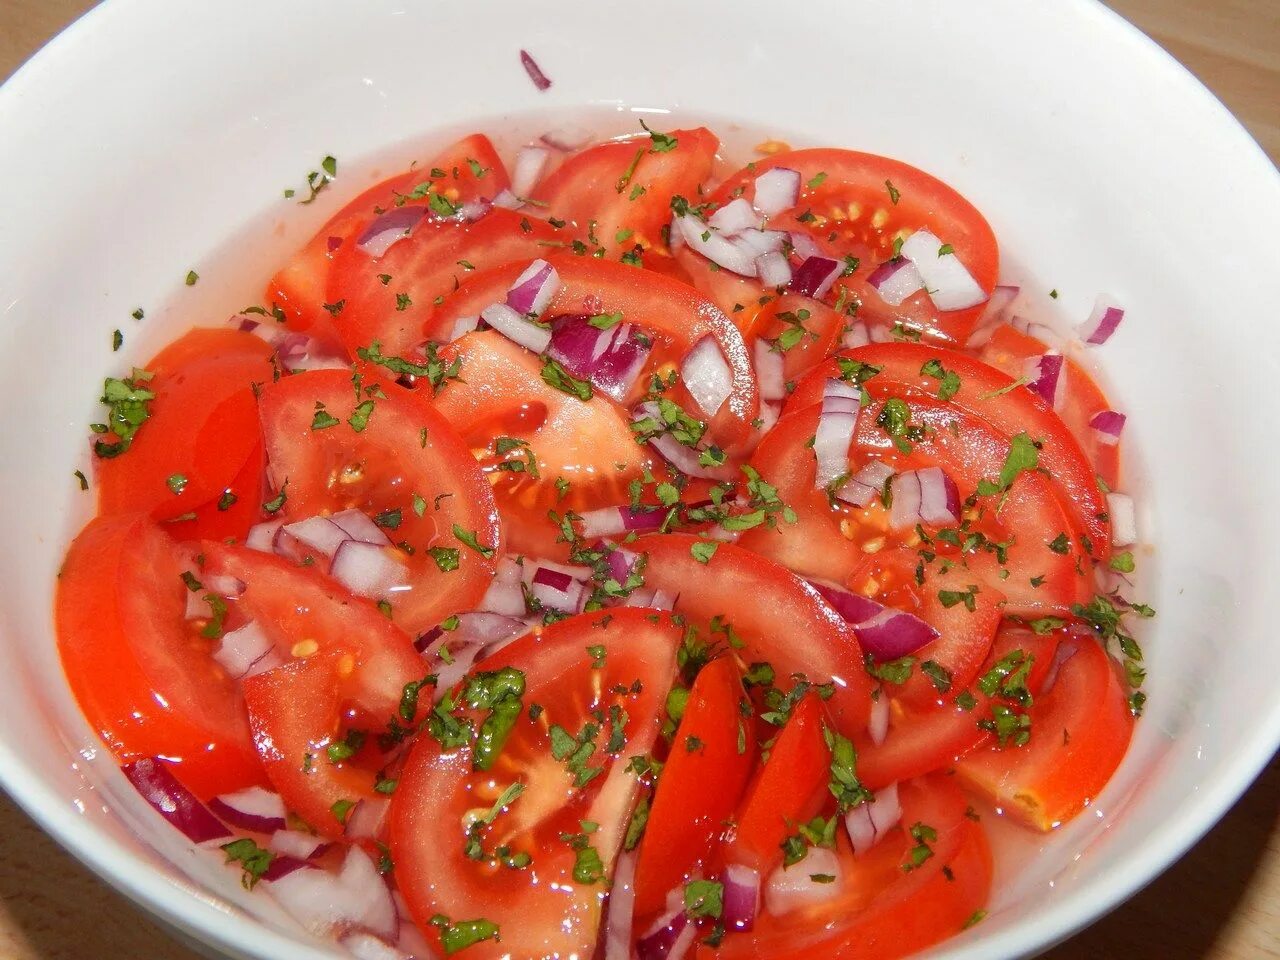 Tomato and onion and. Салат из помидоров. Салат помидоры с луком. Салат из томатов с луком.